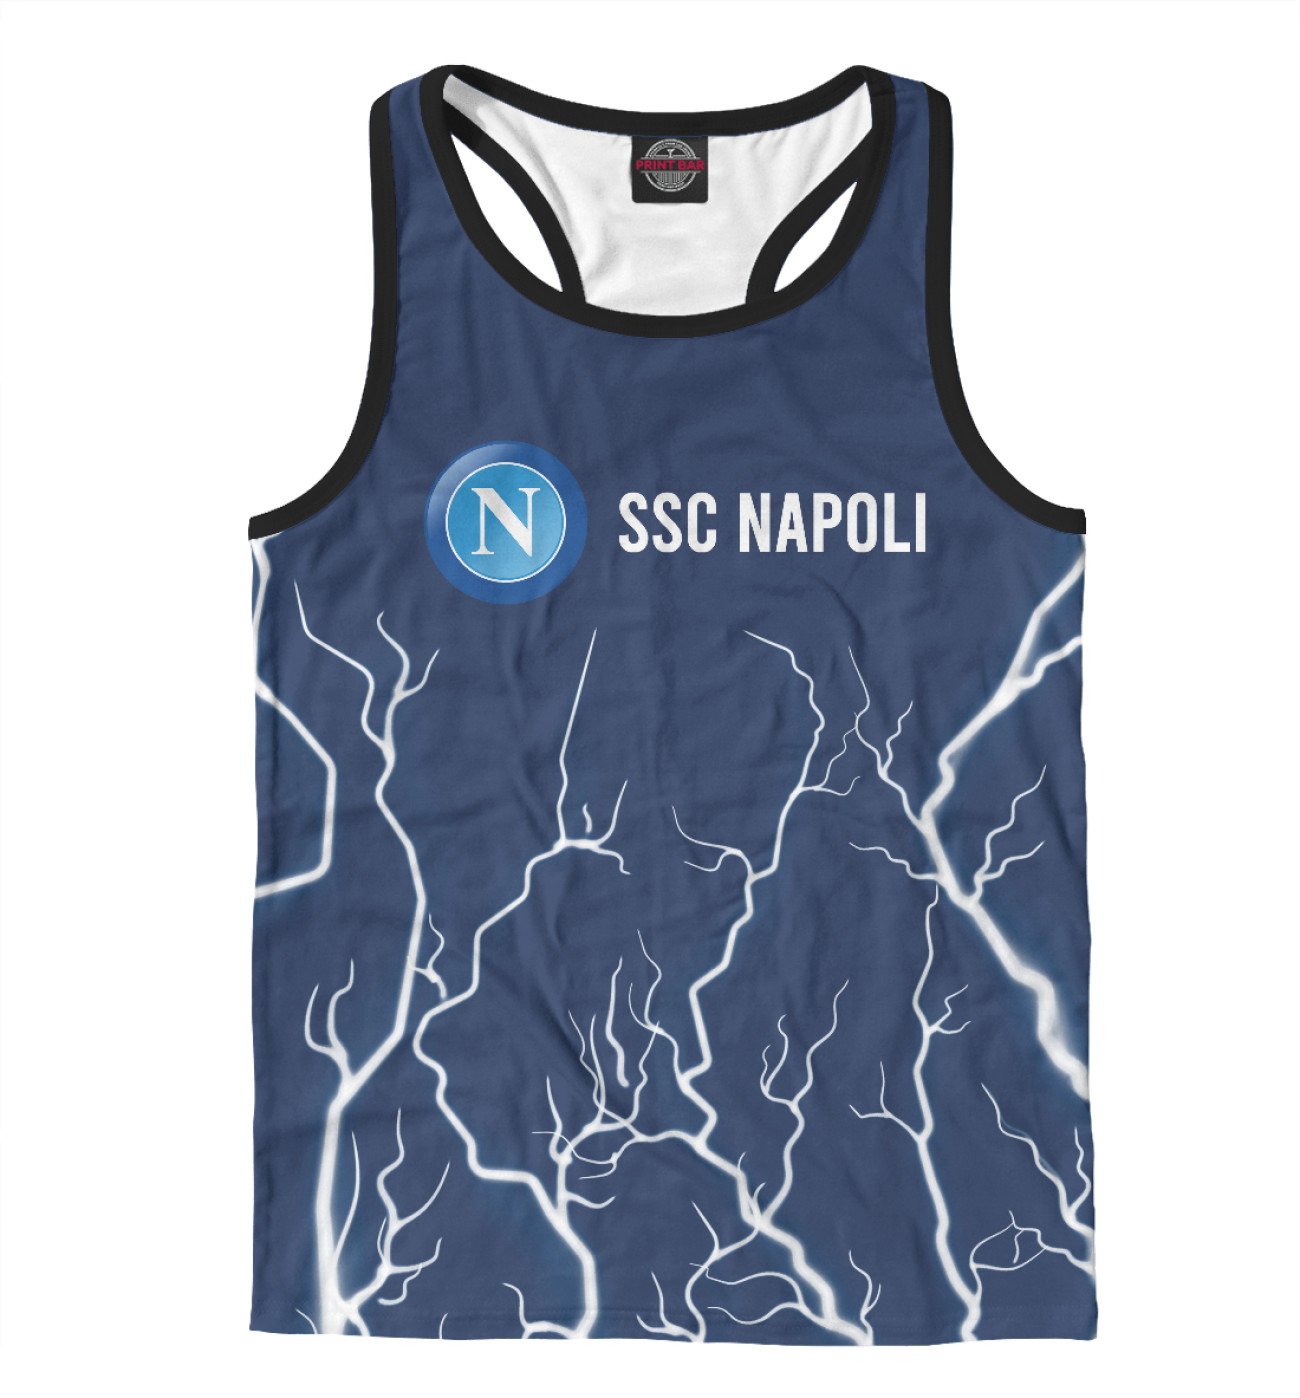 Мужская Борцовка SSC Napoli / Наполи, артикул: NPL-921037-mayb-2